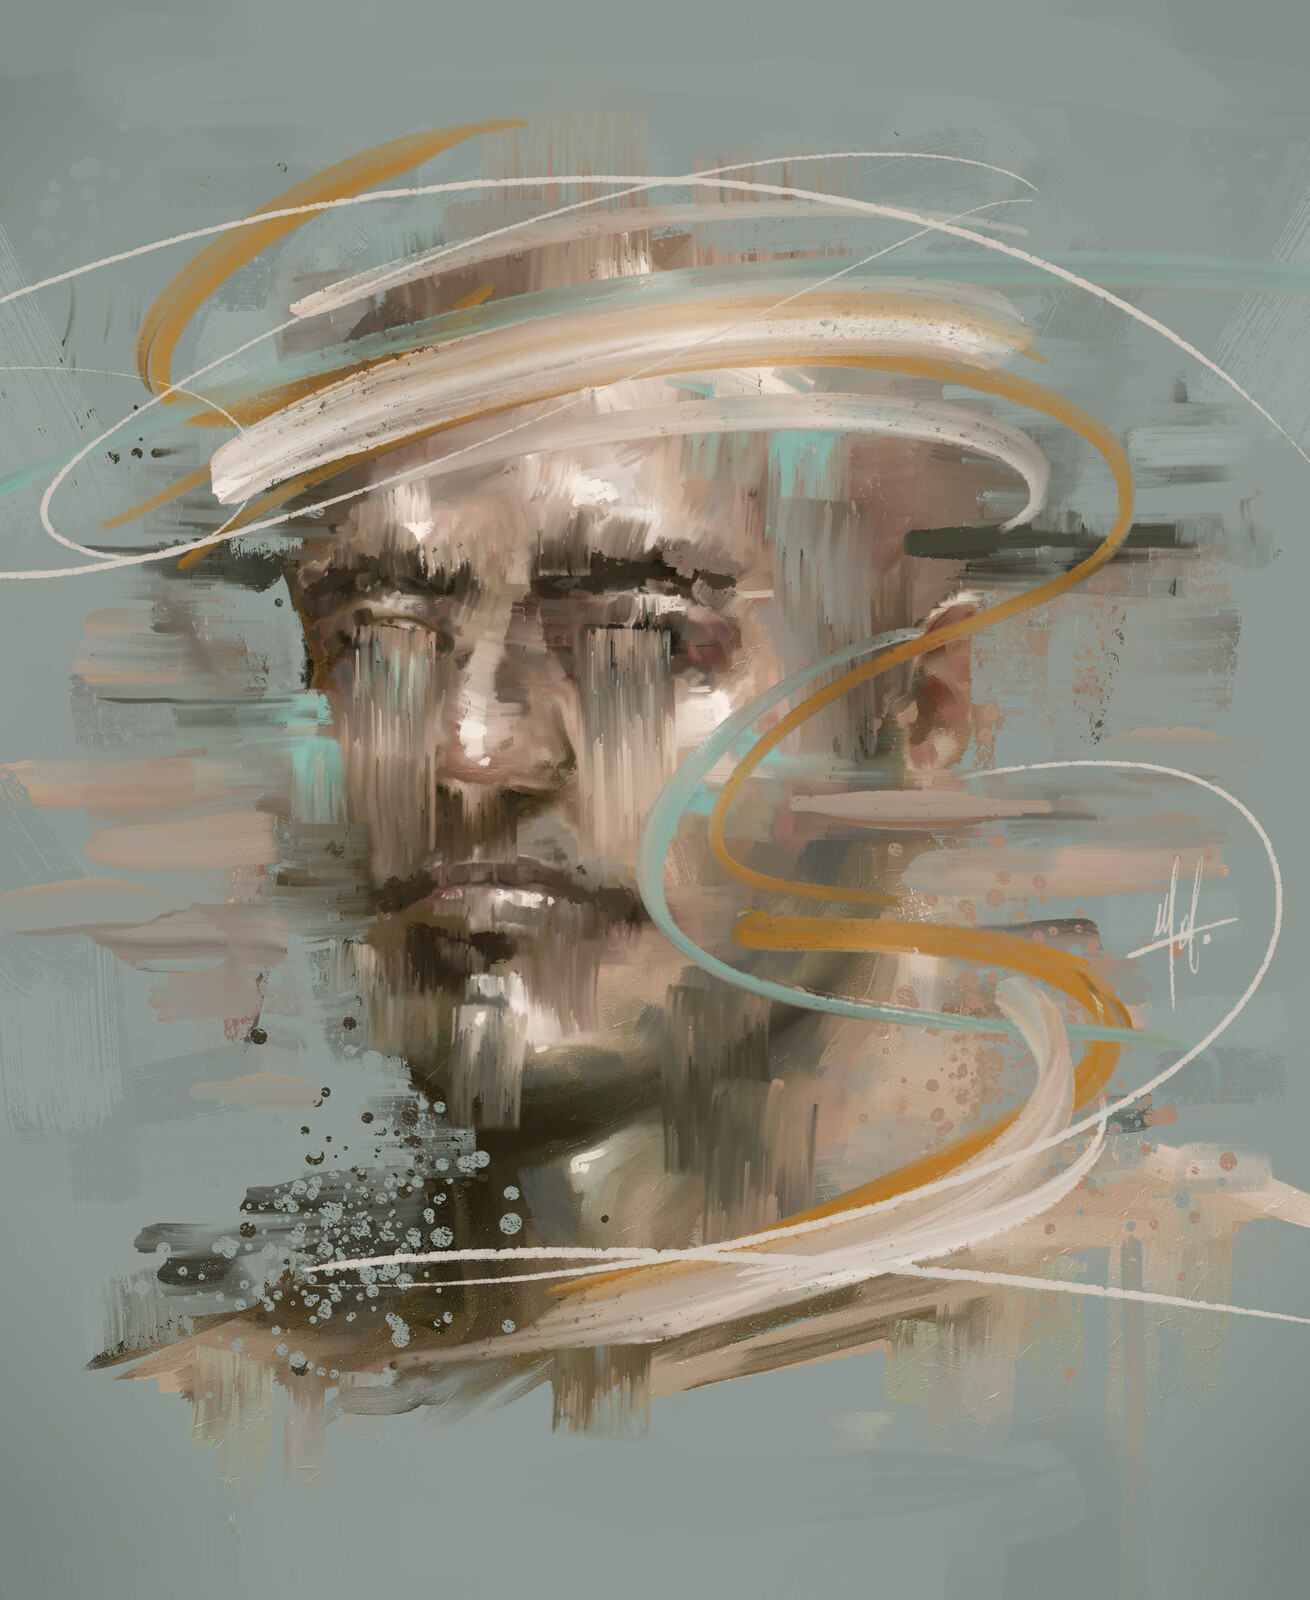 Imaginary Digital Abstract Portrait Painting / Digital Oil